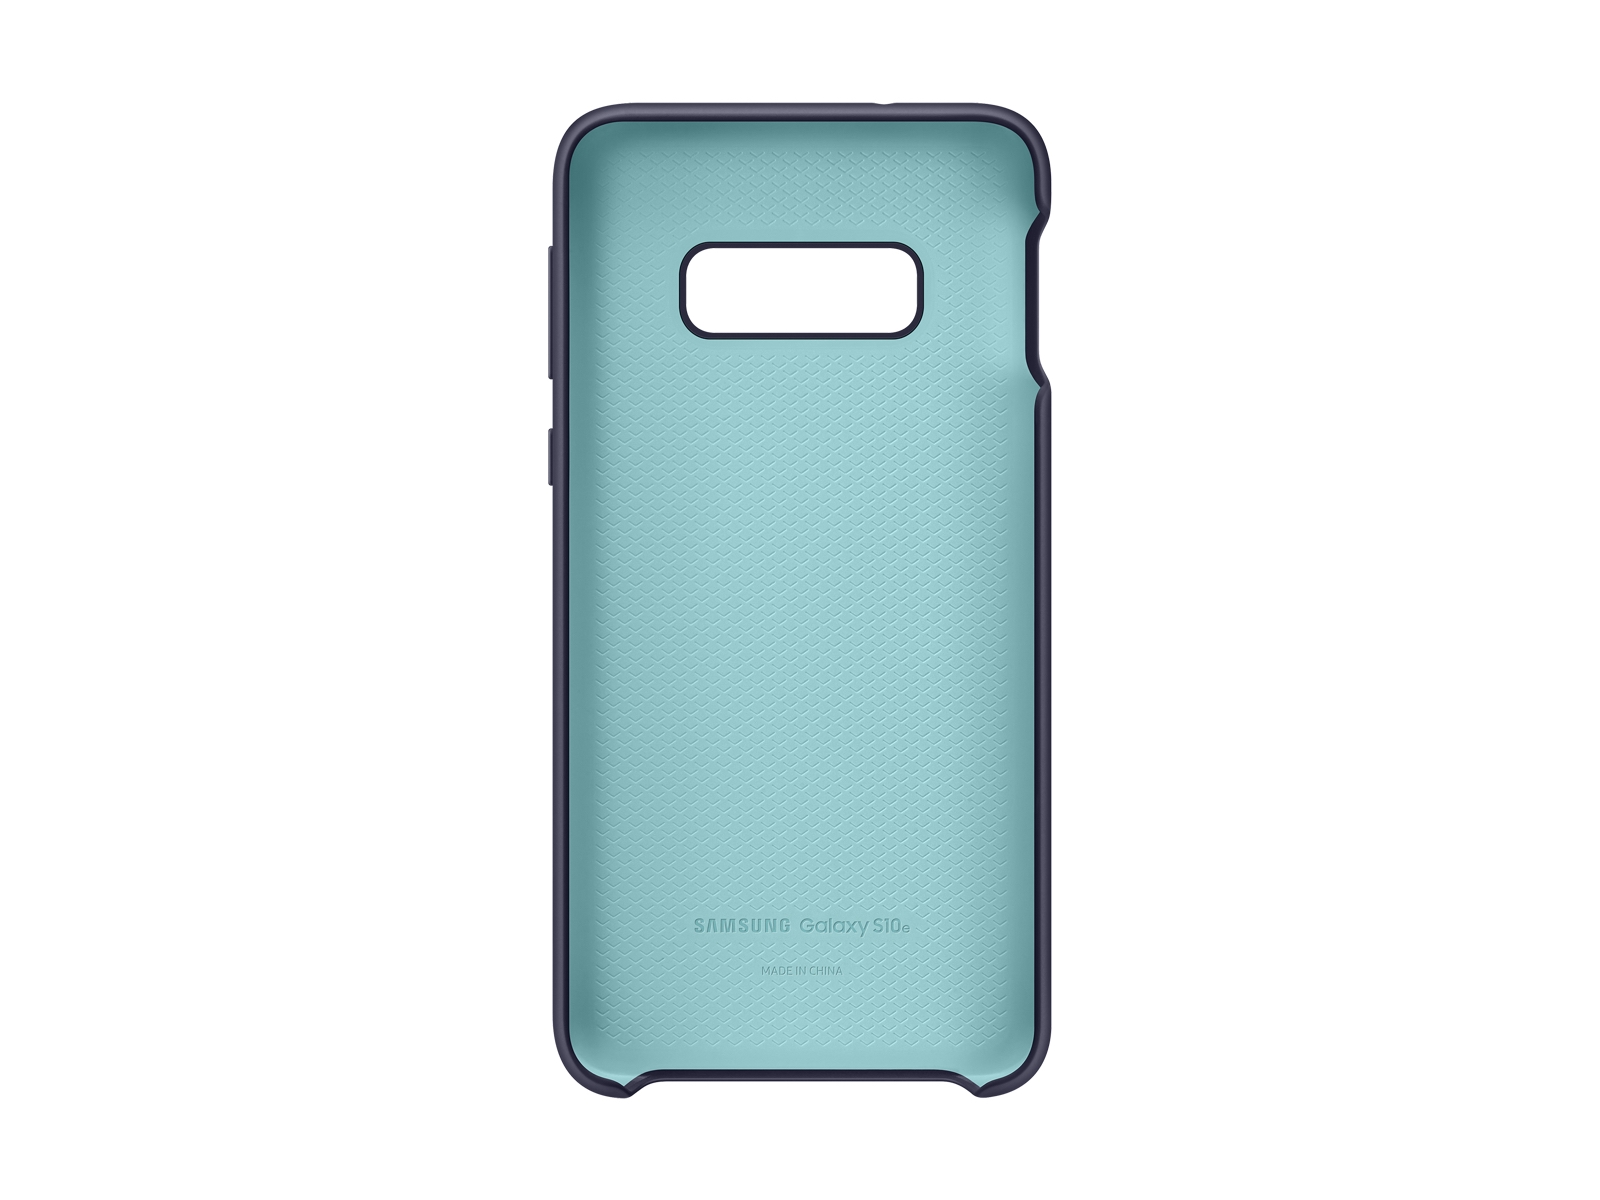 Galaxy S10e Silicone Cover, Green Mobile Accessories - EF-PG970TGEGUS